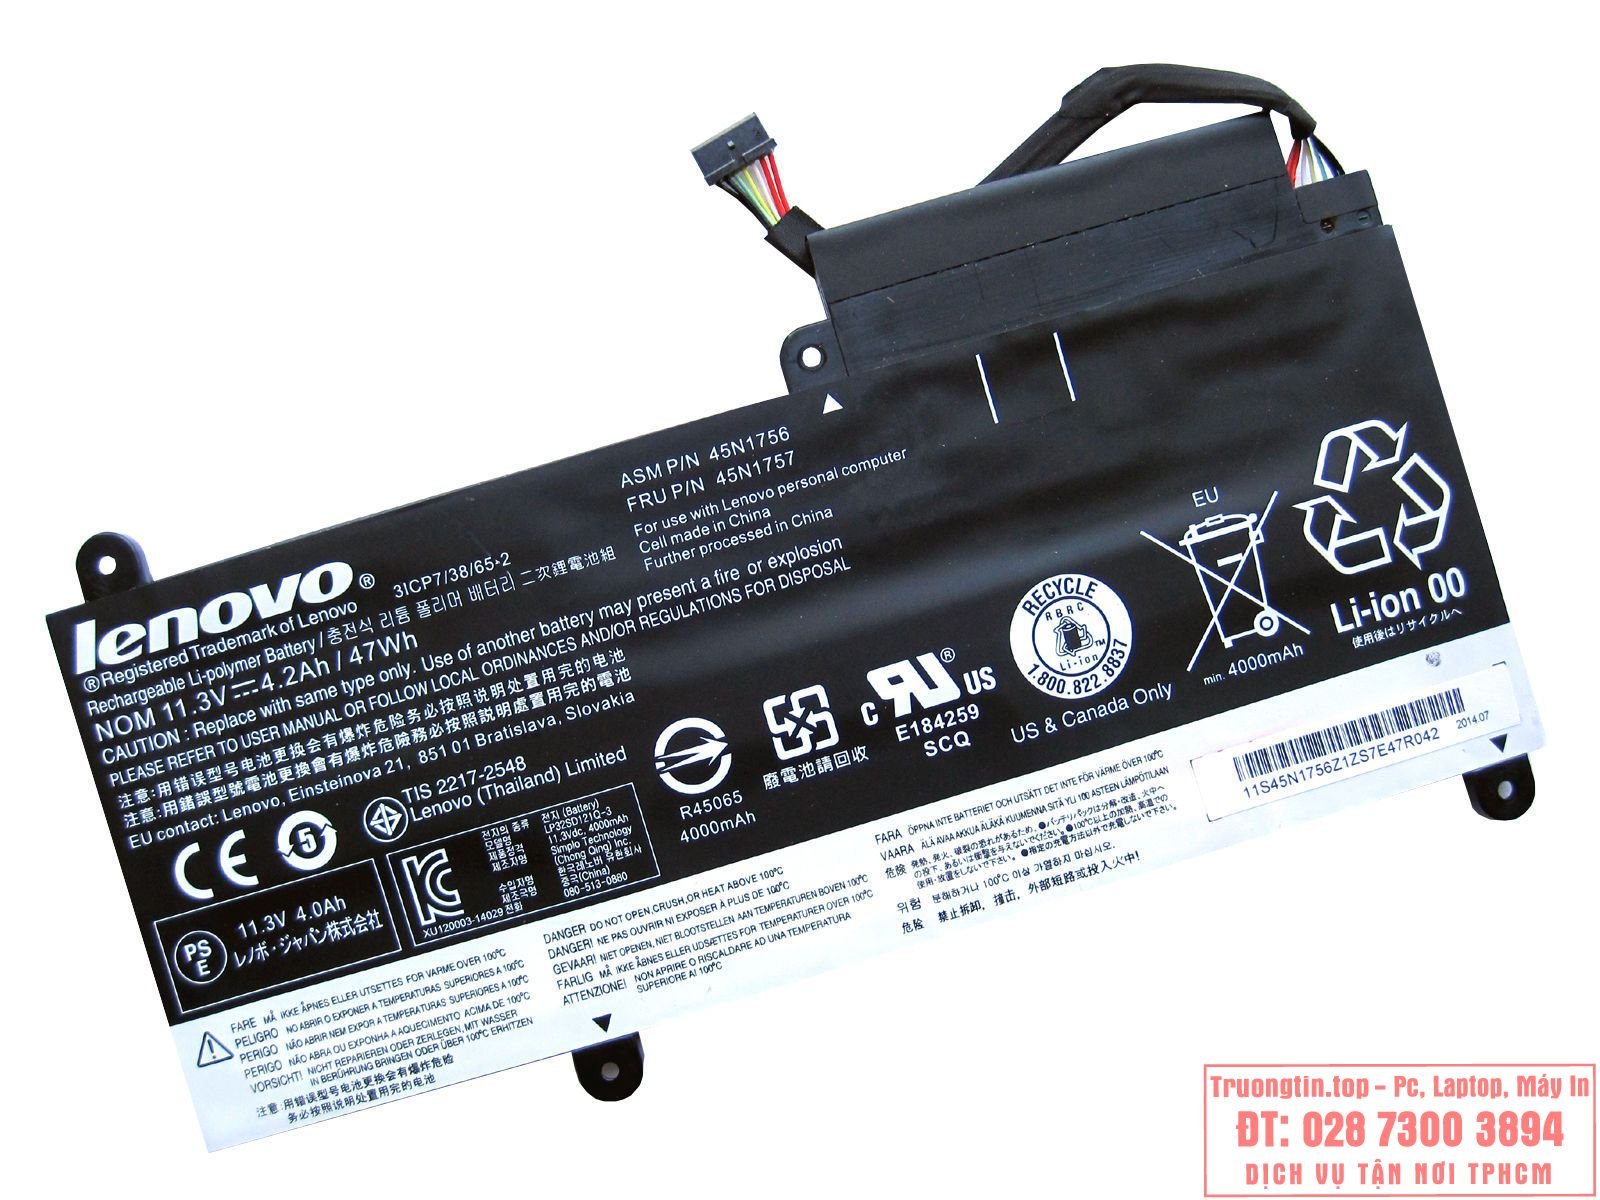  Pin Laptop Lenovo S410 Giá Rẻ Nhất